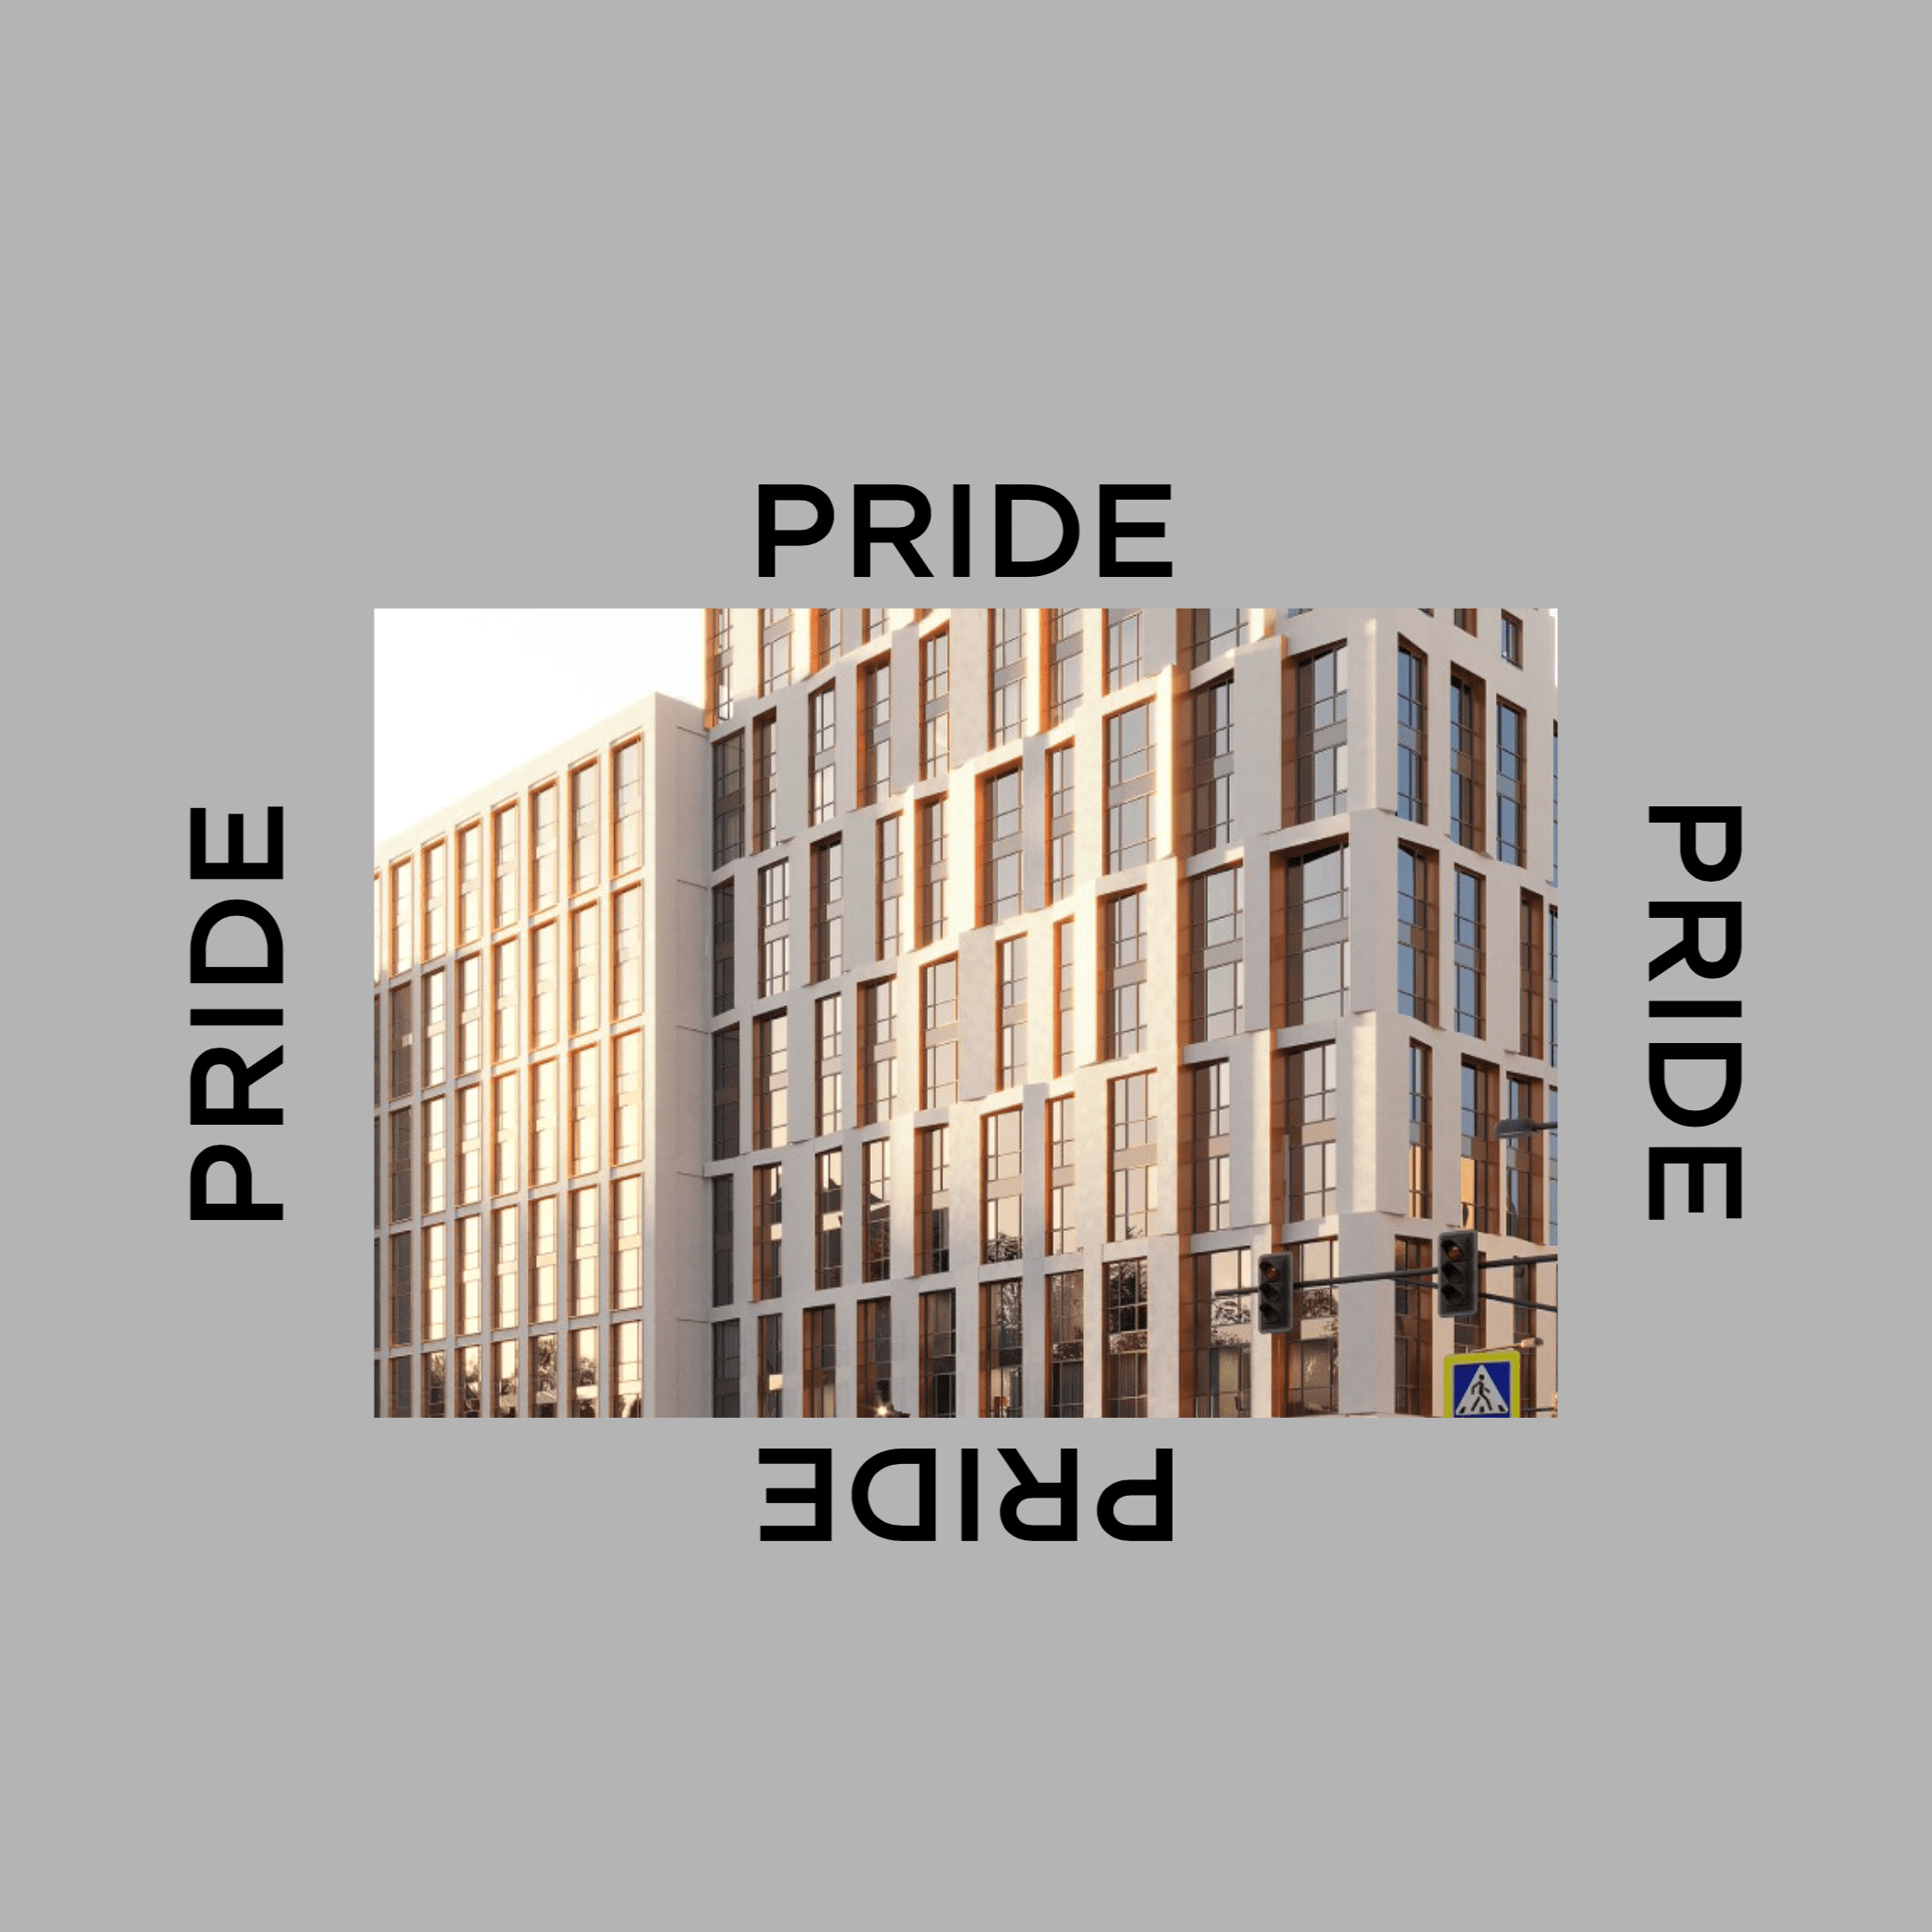 Шрифт tt commons. ЖК Pride. ЖК Прайд Пионер. ЖК Pride логотип. Прайд ЖК архитектурное бюро.